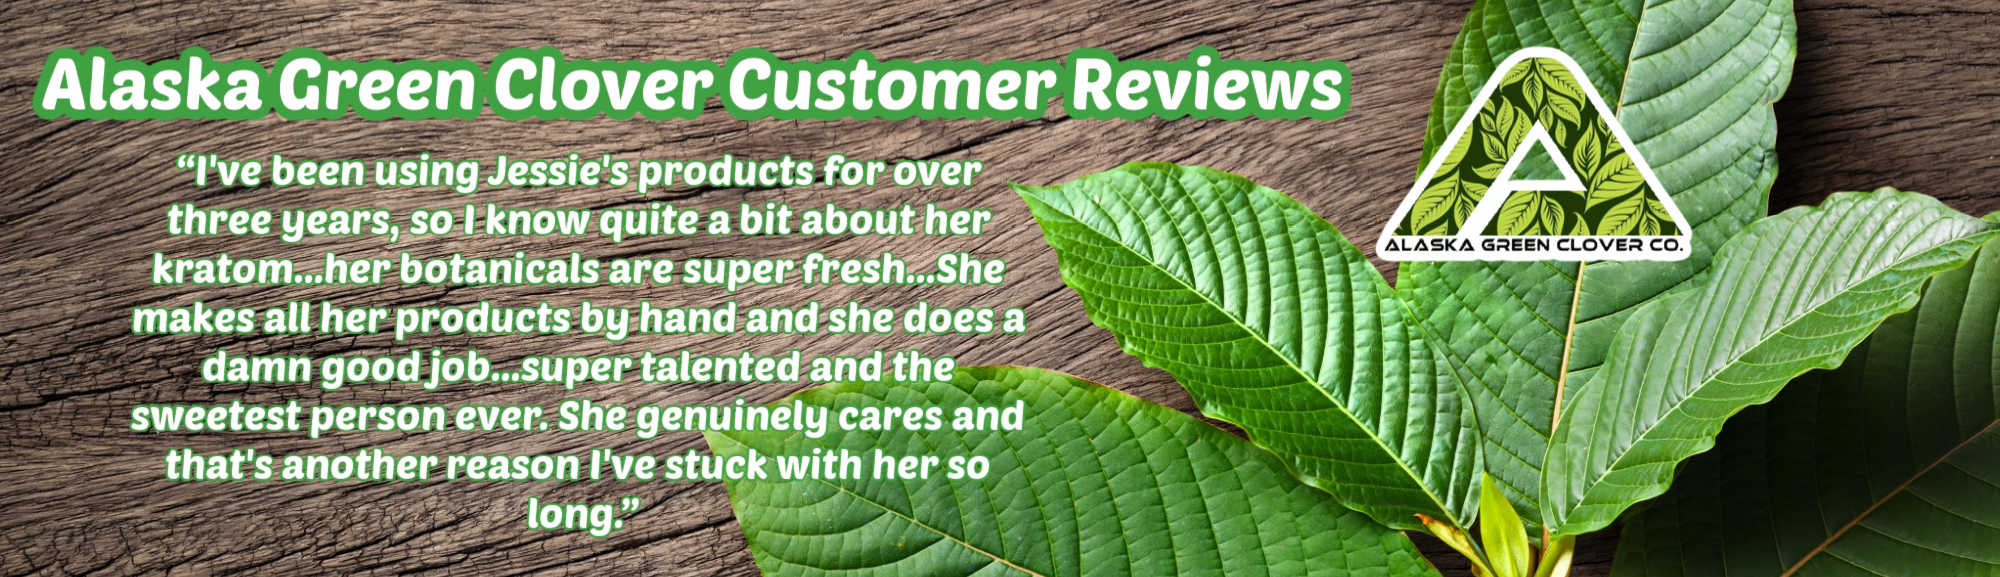 image of alaska green clover customer reviews